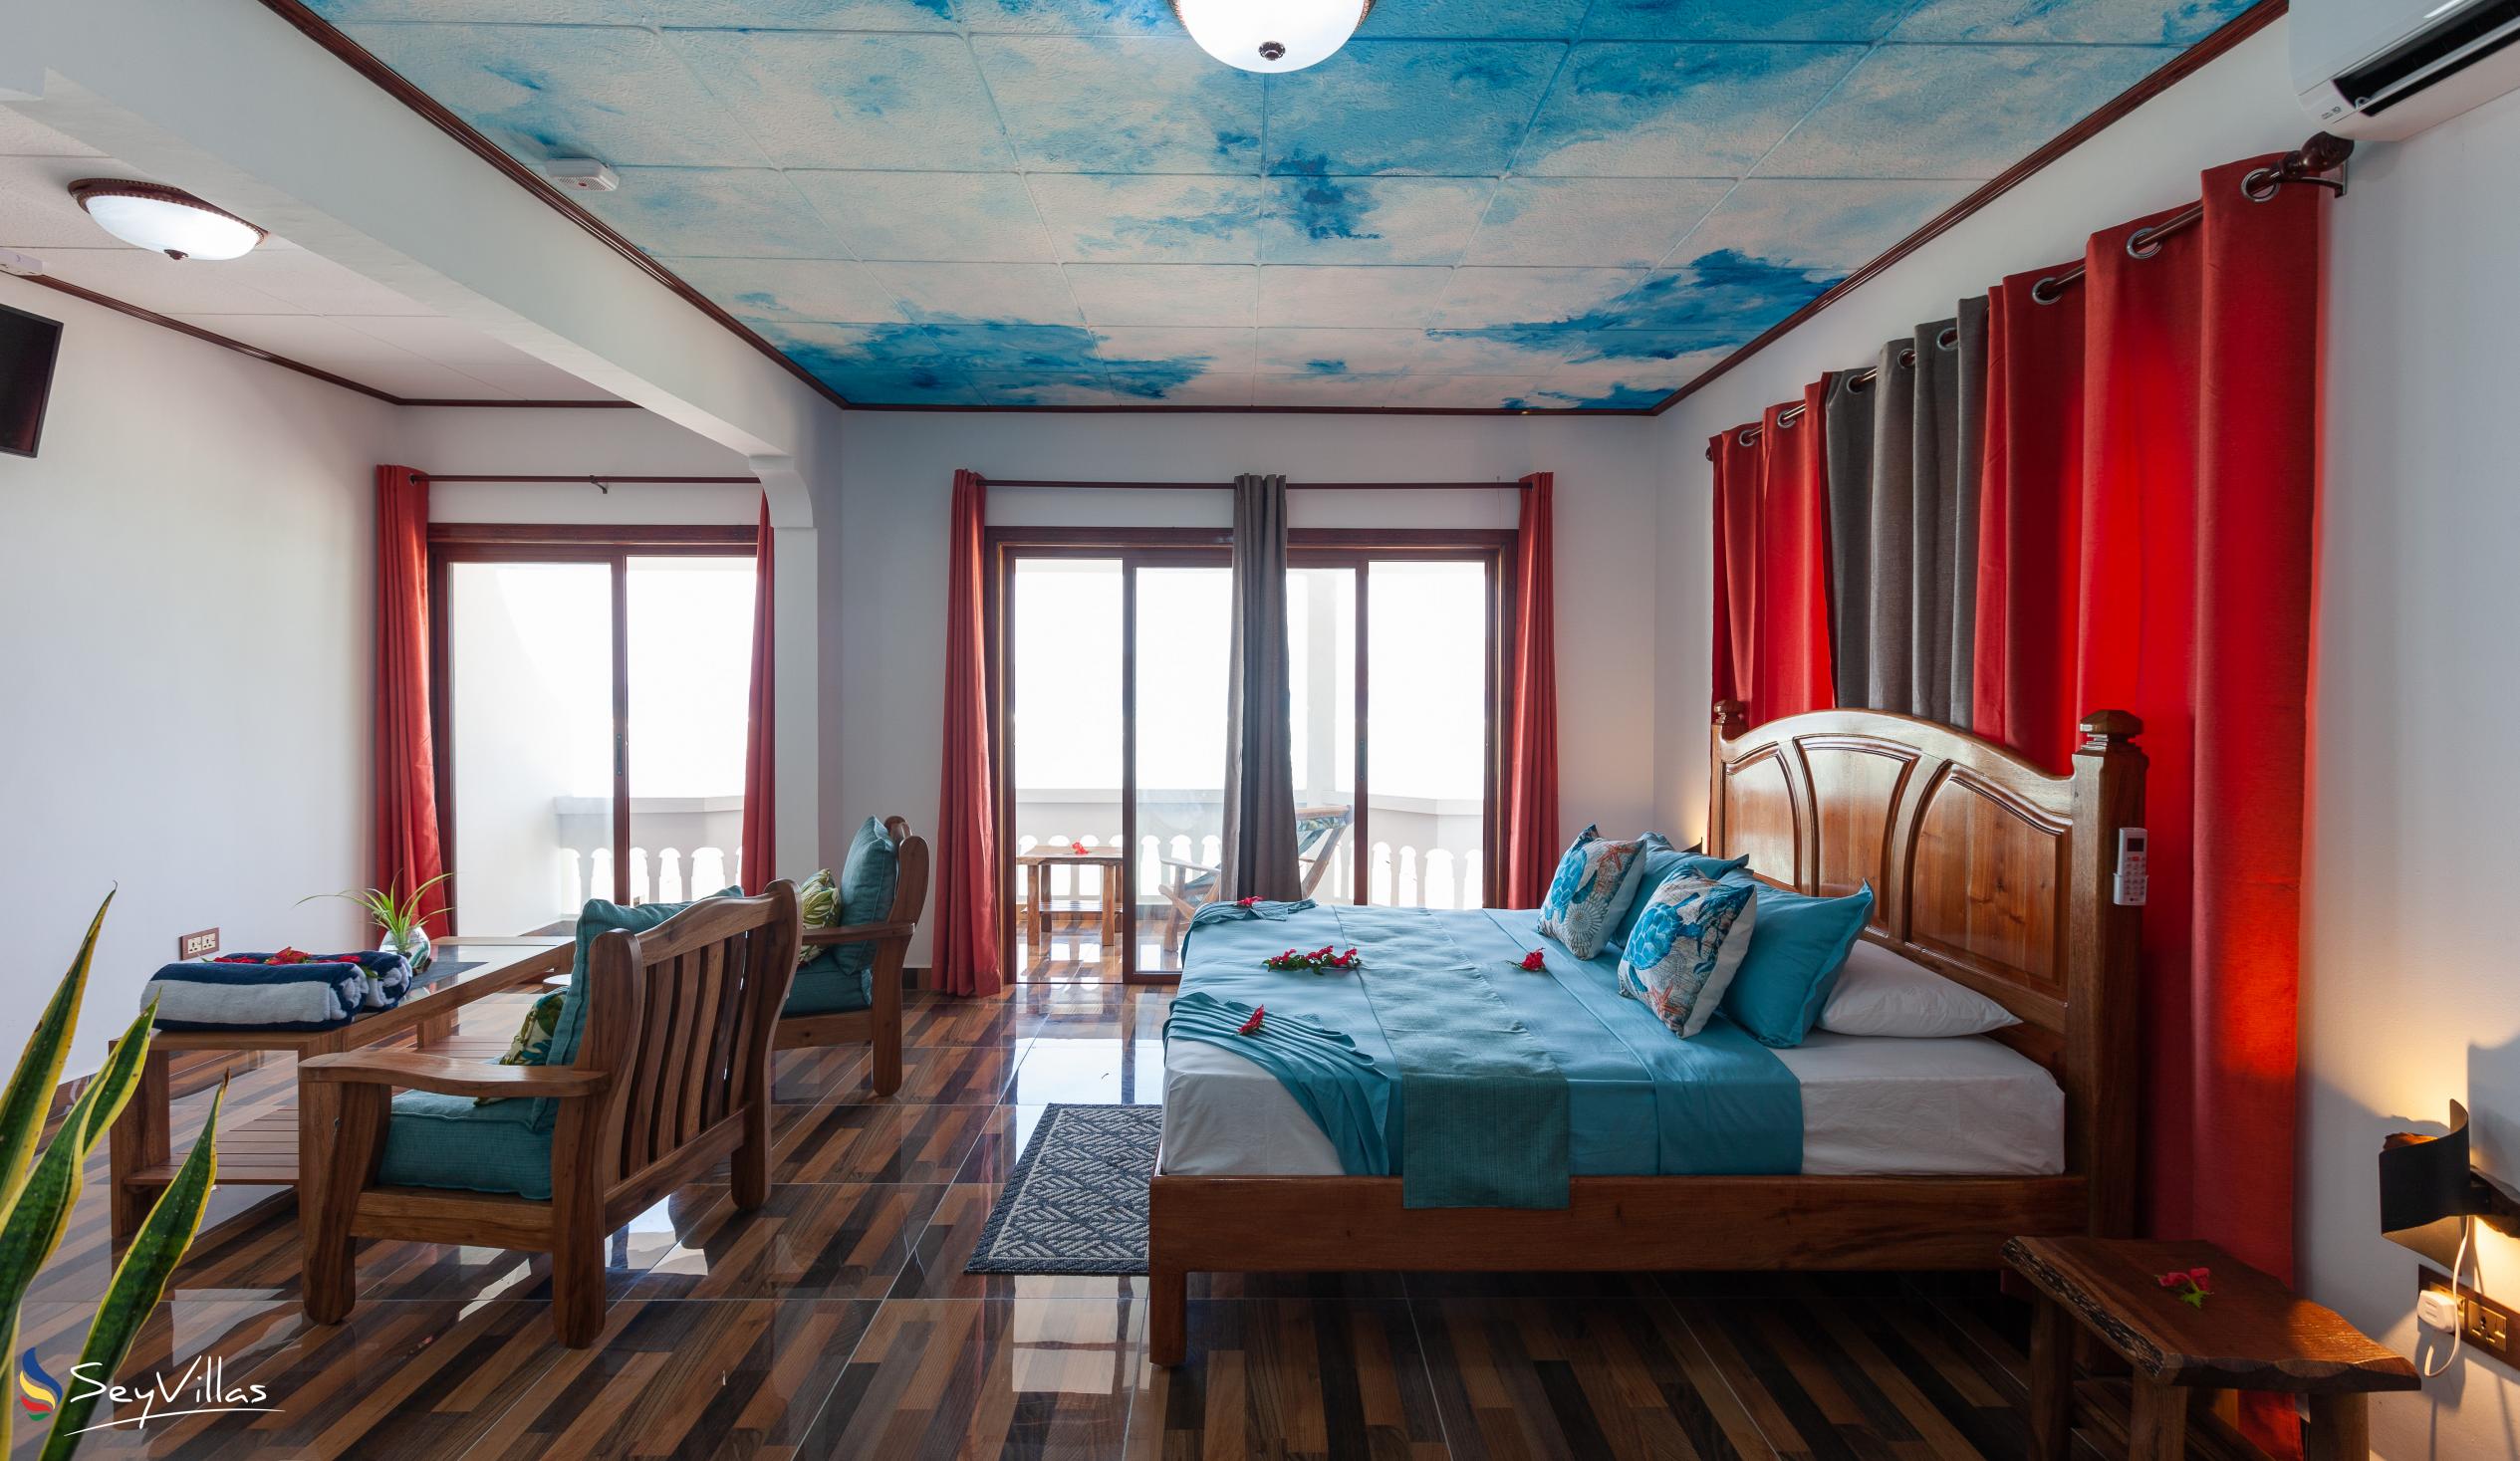 Photo 52: MT Seaside Apartments - Superior Sea-View Apartment - La Digue (Seychelles)